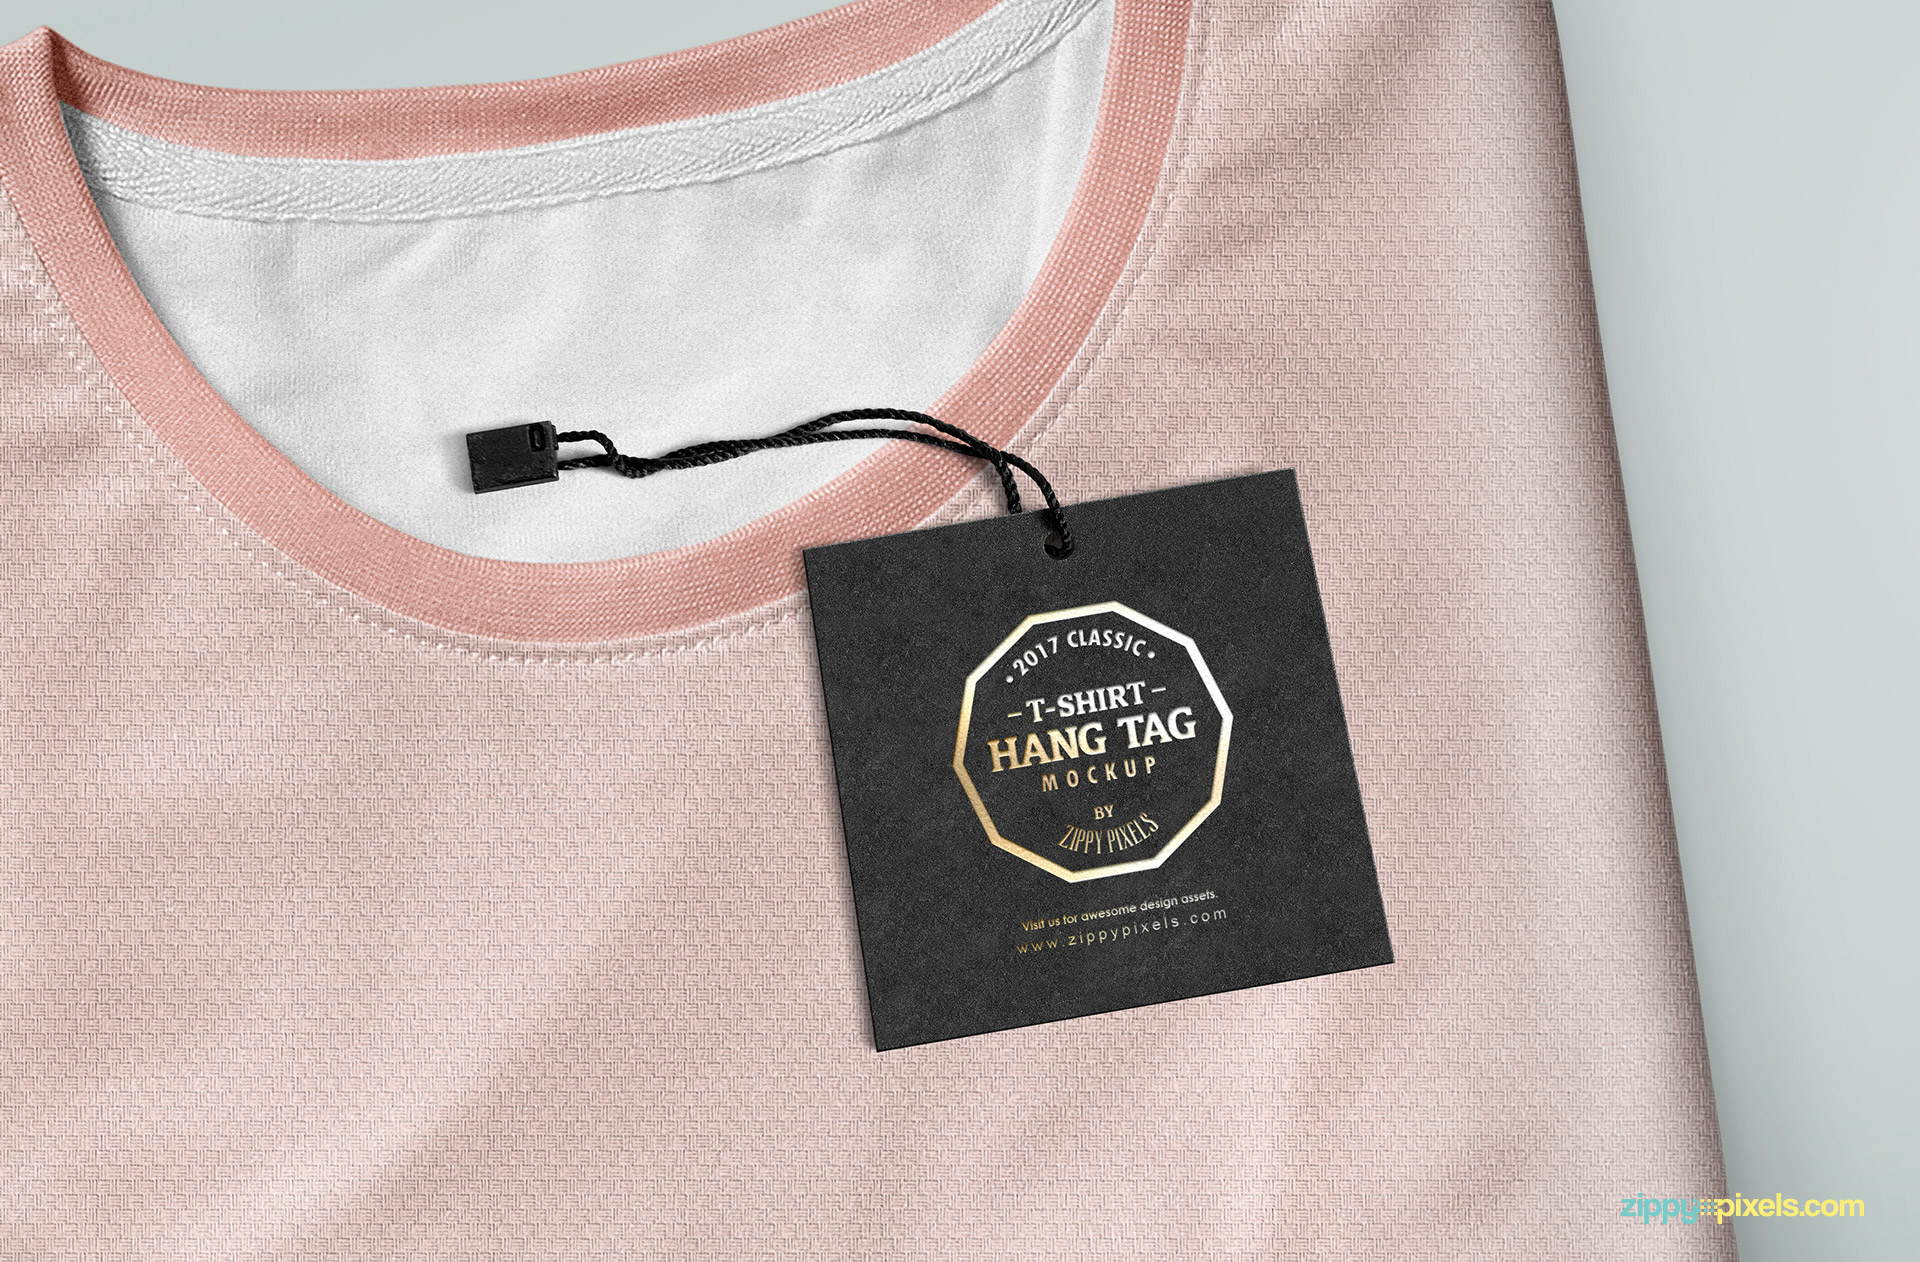 Elegant hang tag mockup on T-shirt for branding logo.